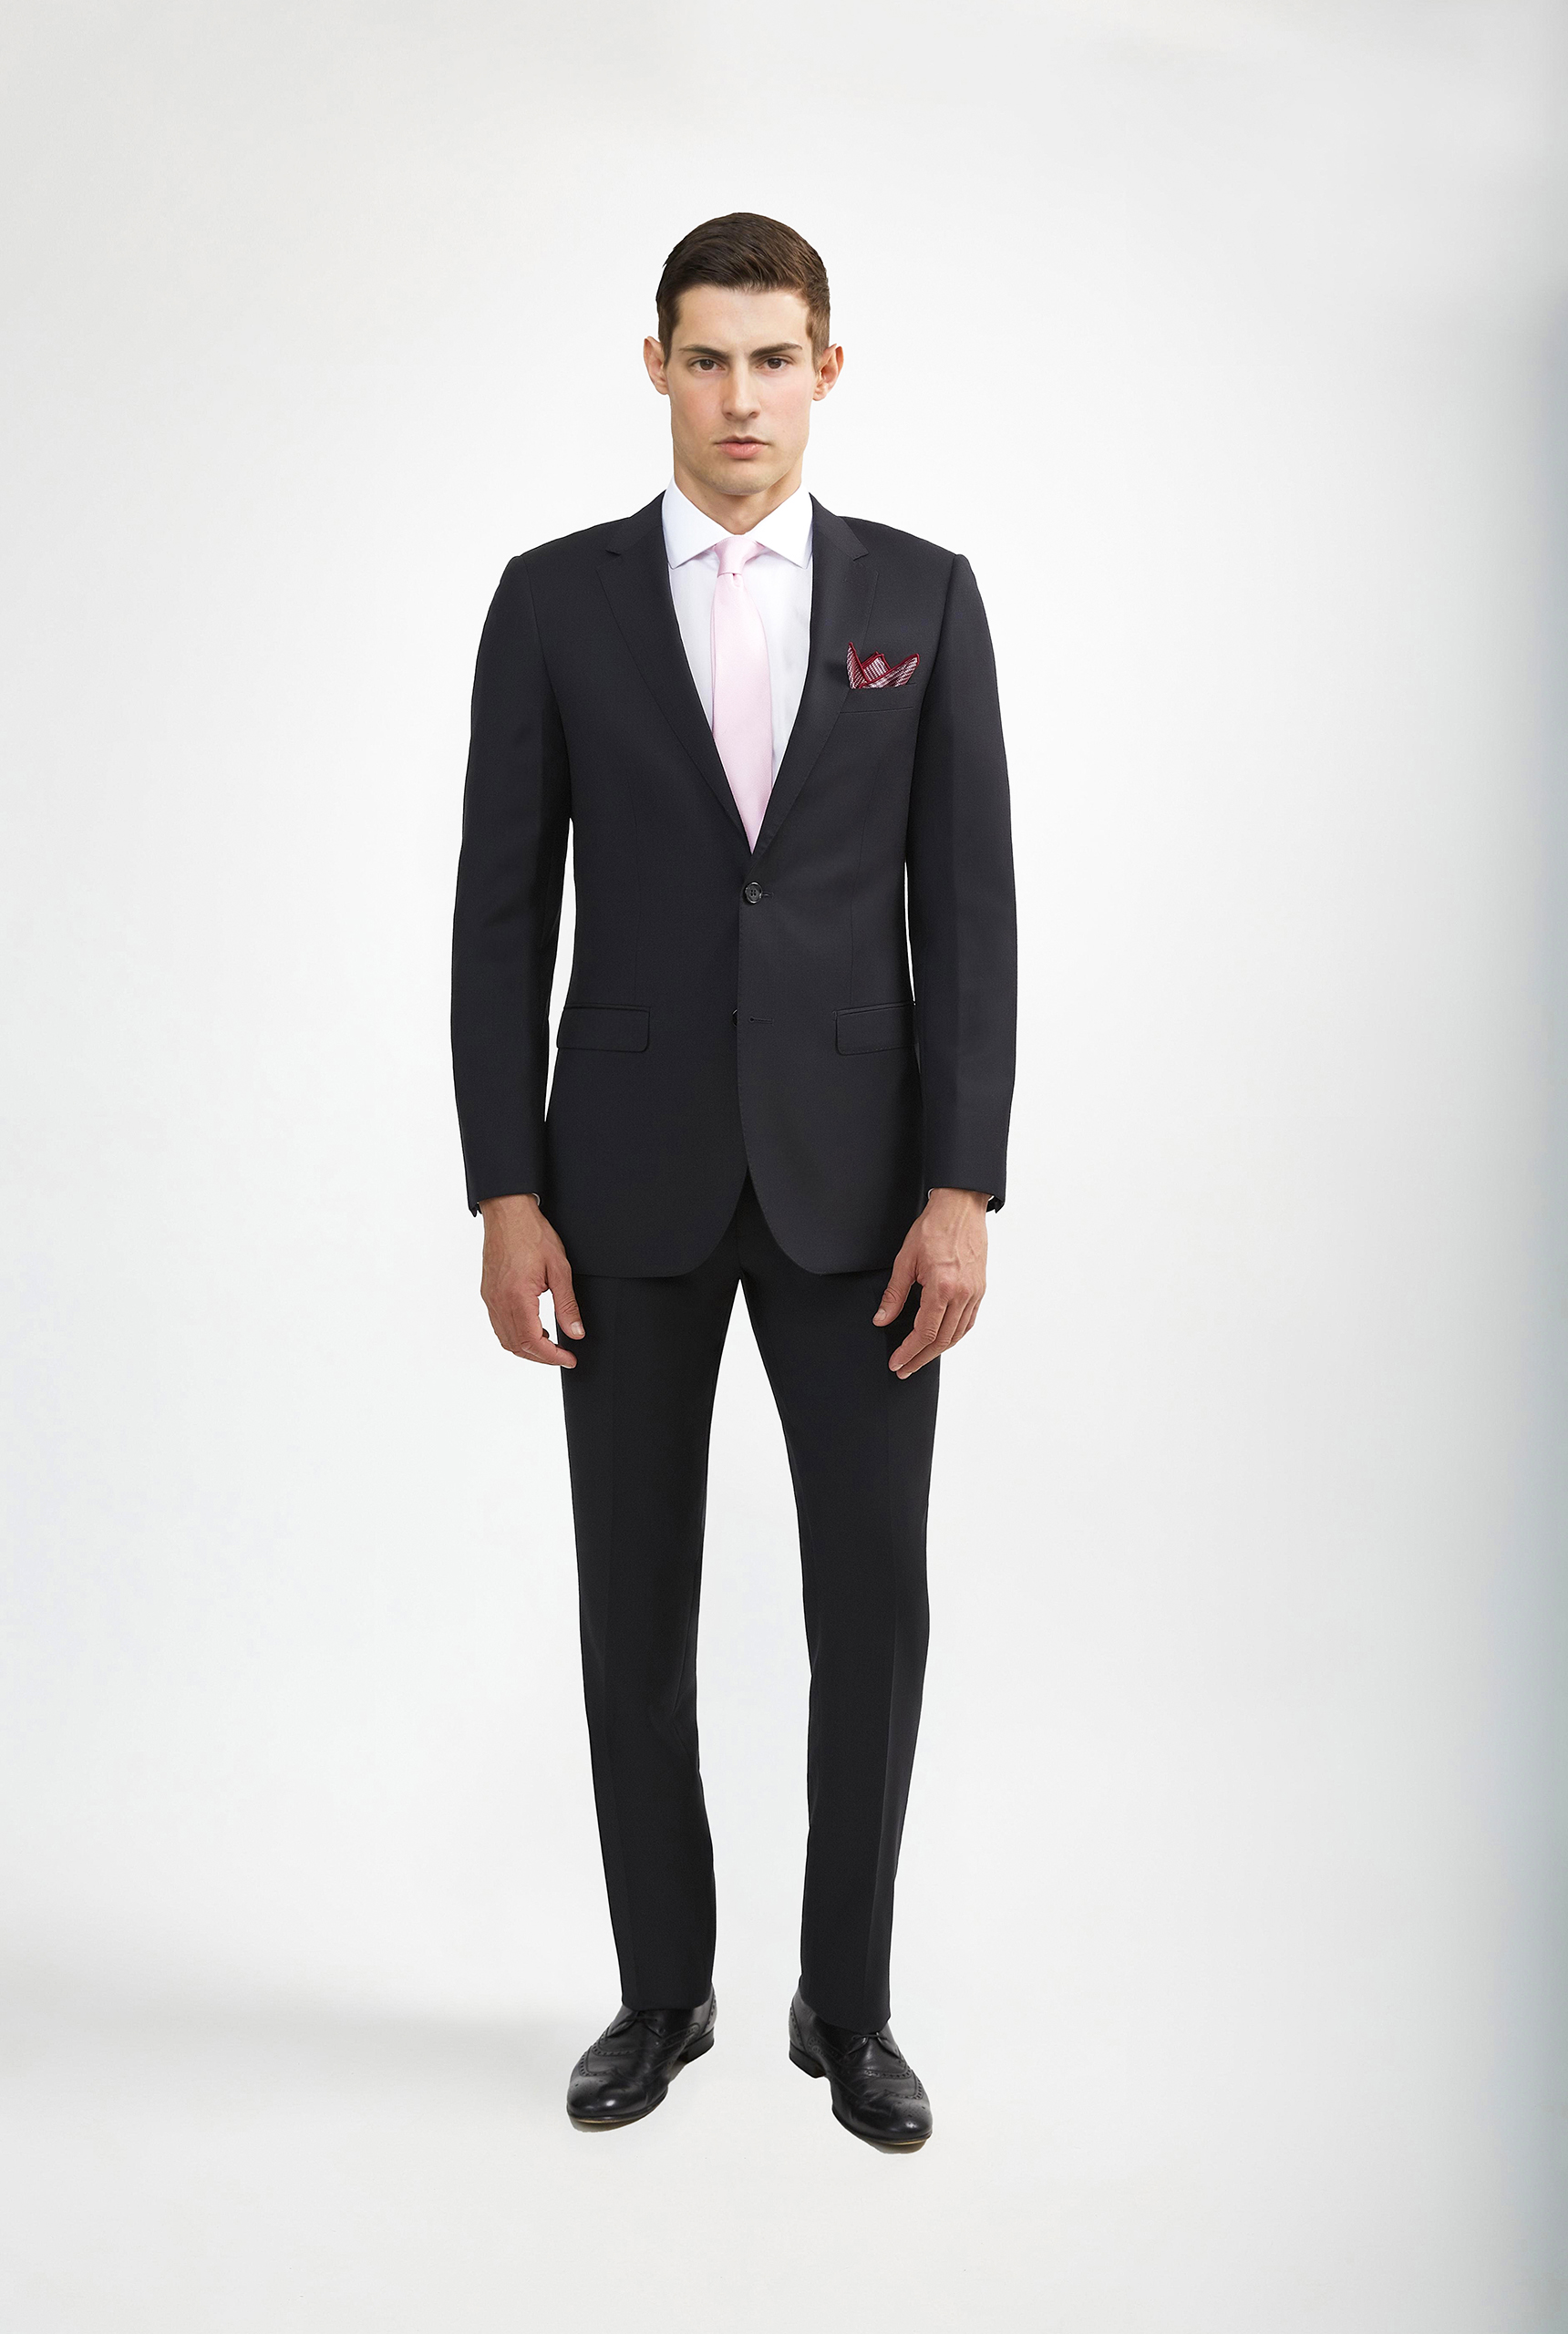 Adoro Deluxe: 100% Italian Wool Notch Lapel Royal Blue Suit